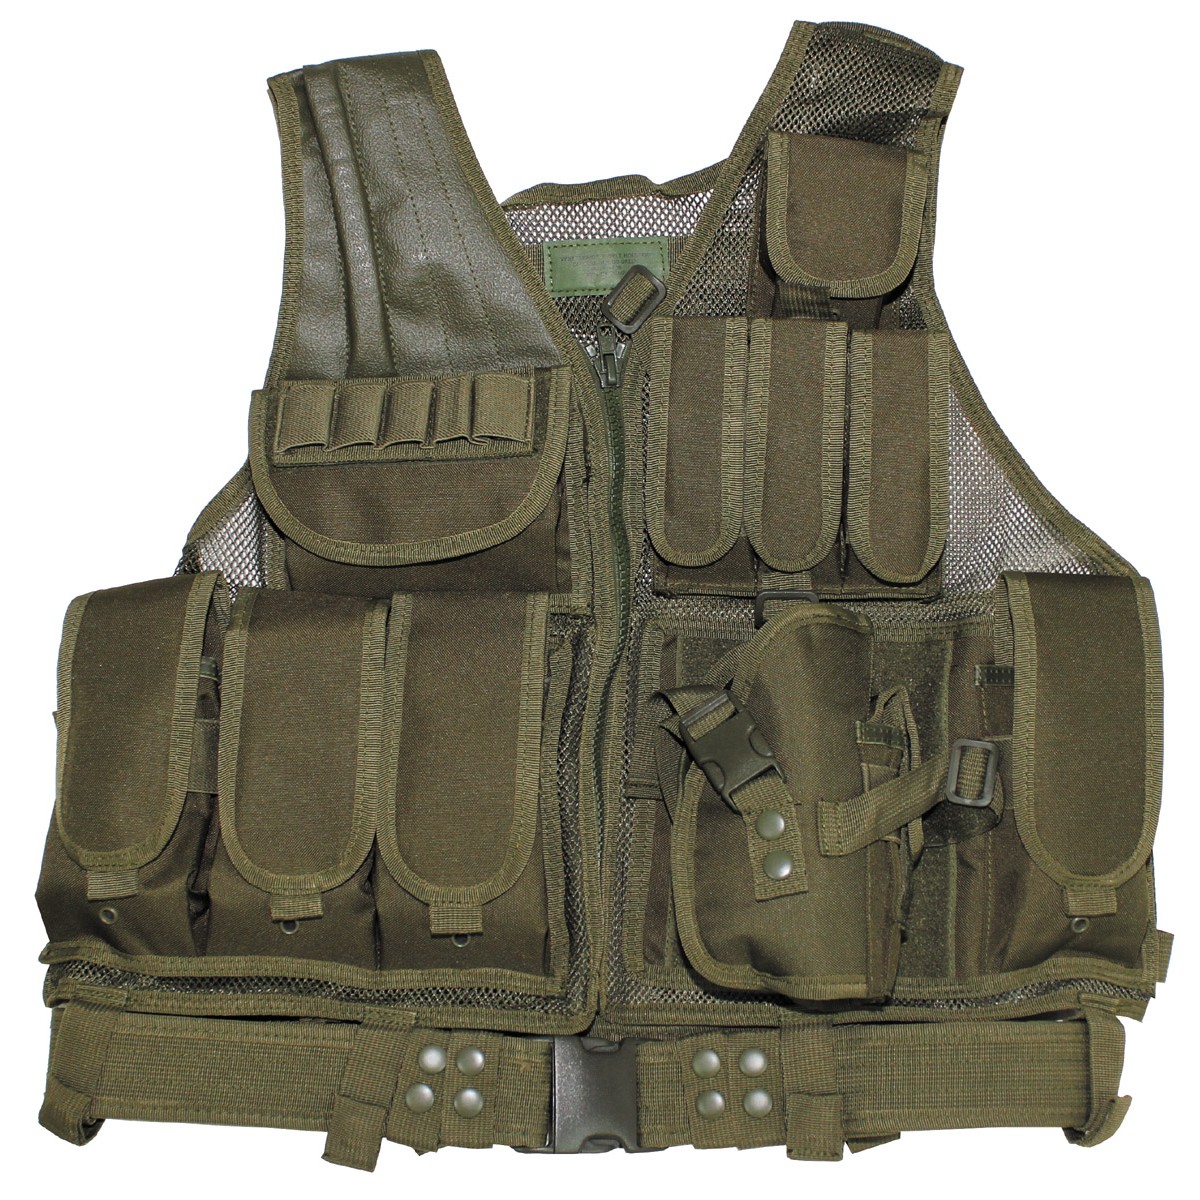 USMC Tactical Combat Assault Military Battle Vest with Belt - OD Green